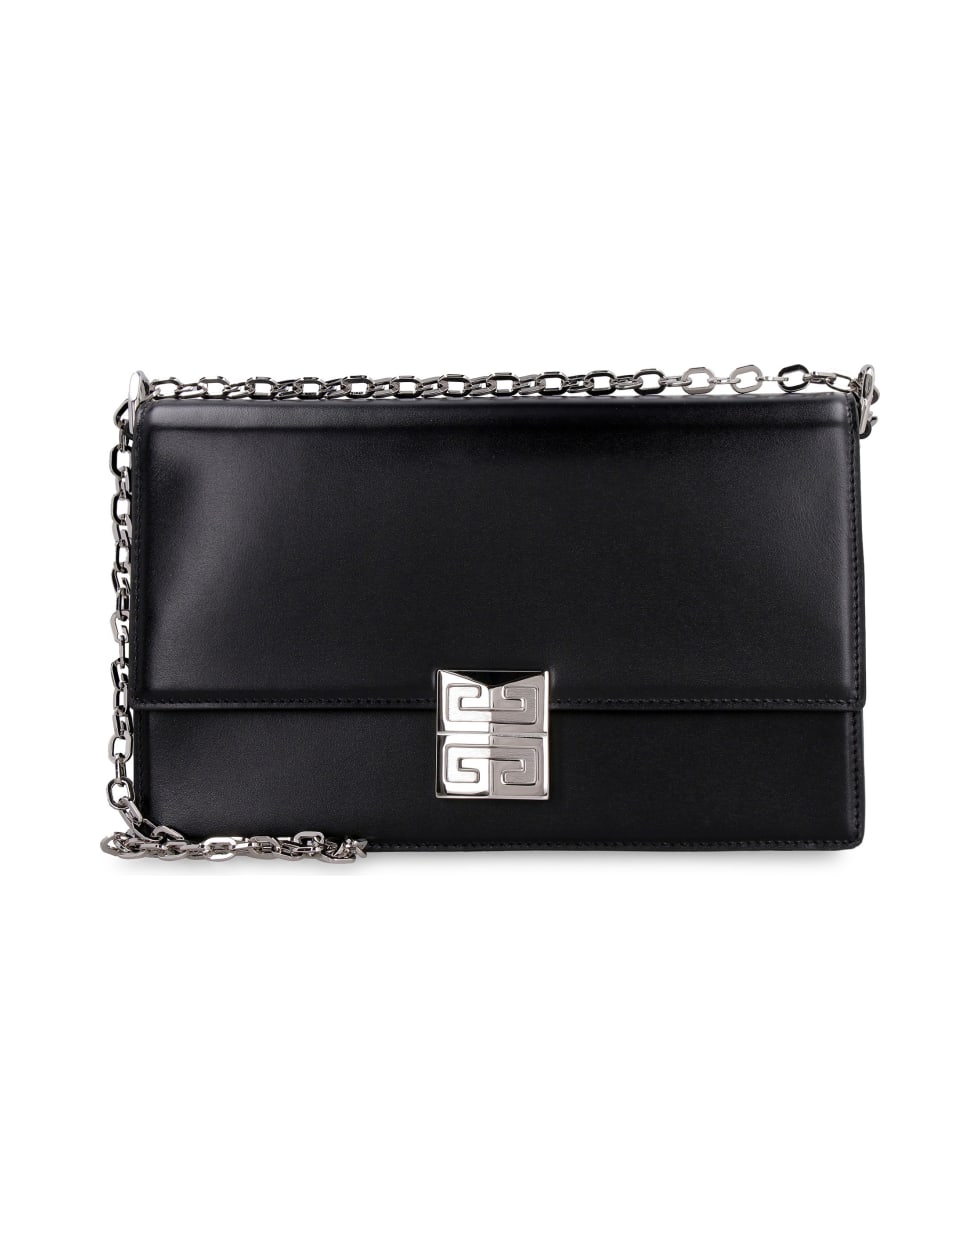 Givenchy 4g Leather Crossbody Bag - black